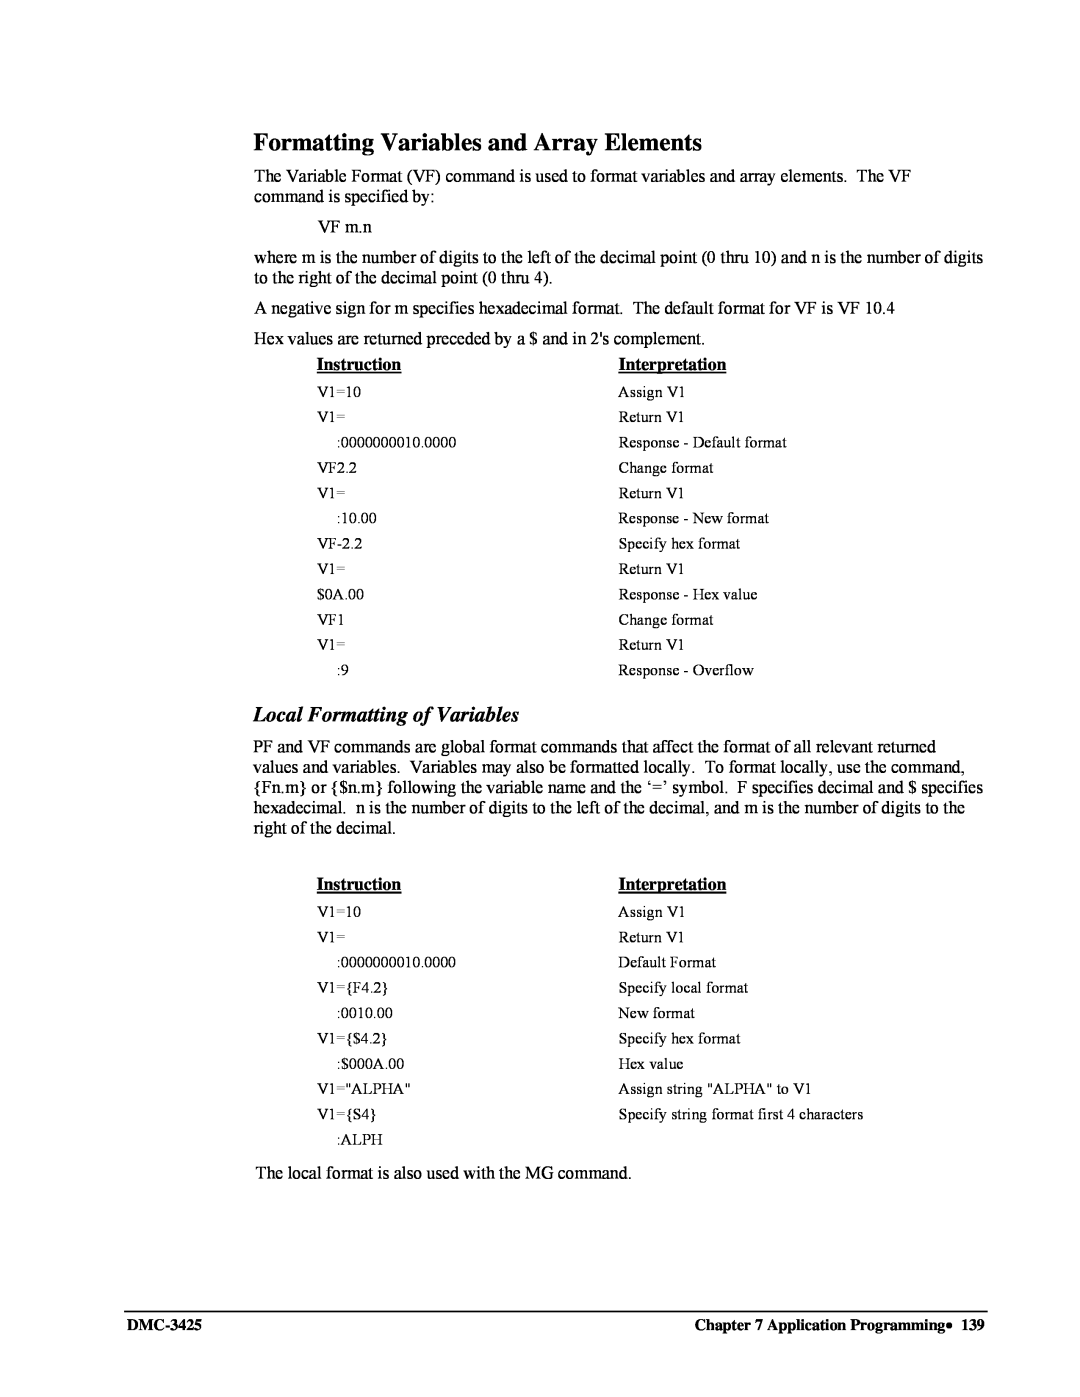 Galil DMC-3425 user manual Formatting Variables and Array Elements, Local Formatting of Variables 